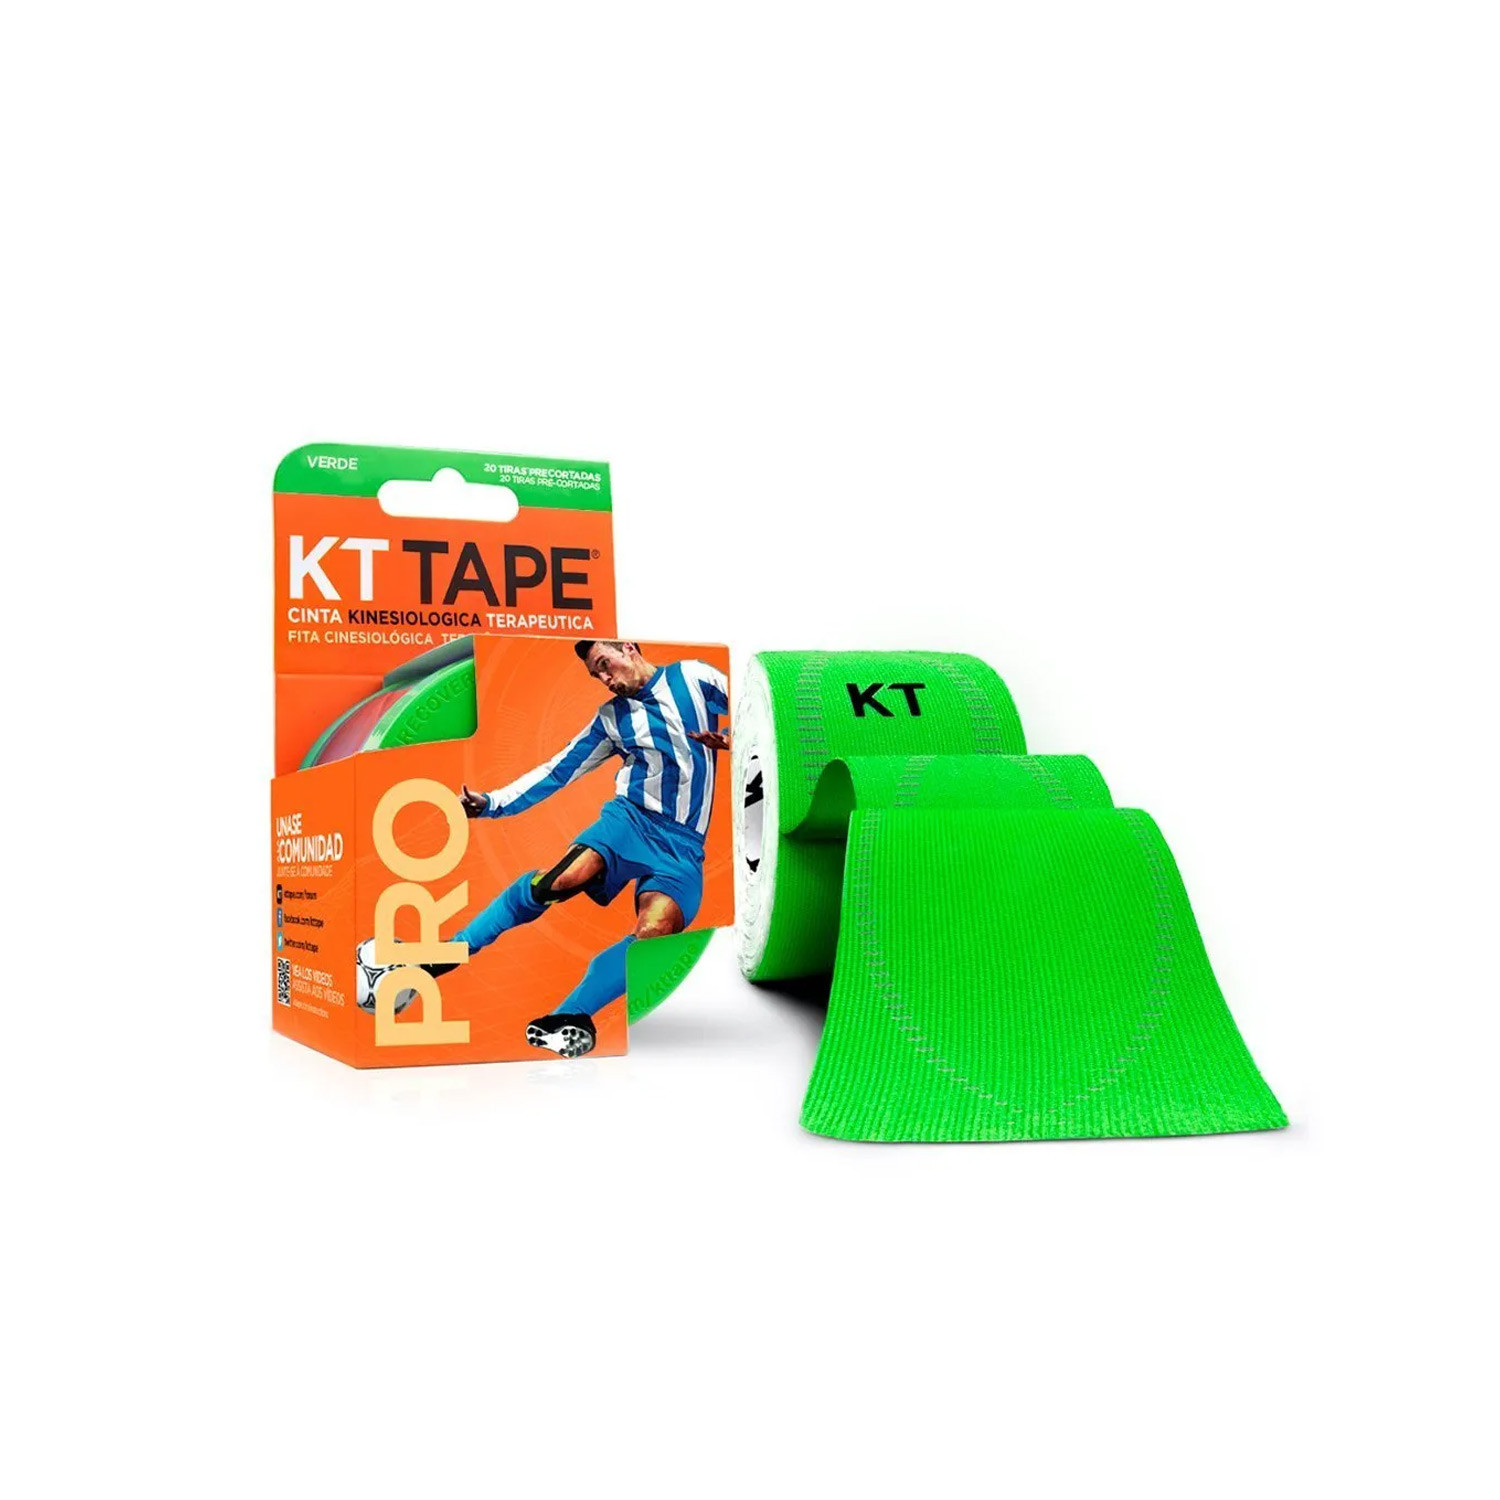 KT Tape Pro Sintético Fast Pack com 3 Tiras PRE Cortadas Rosa